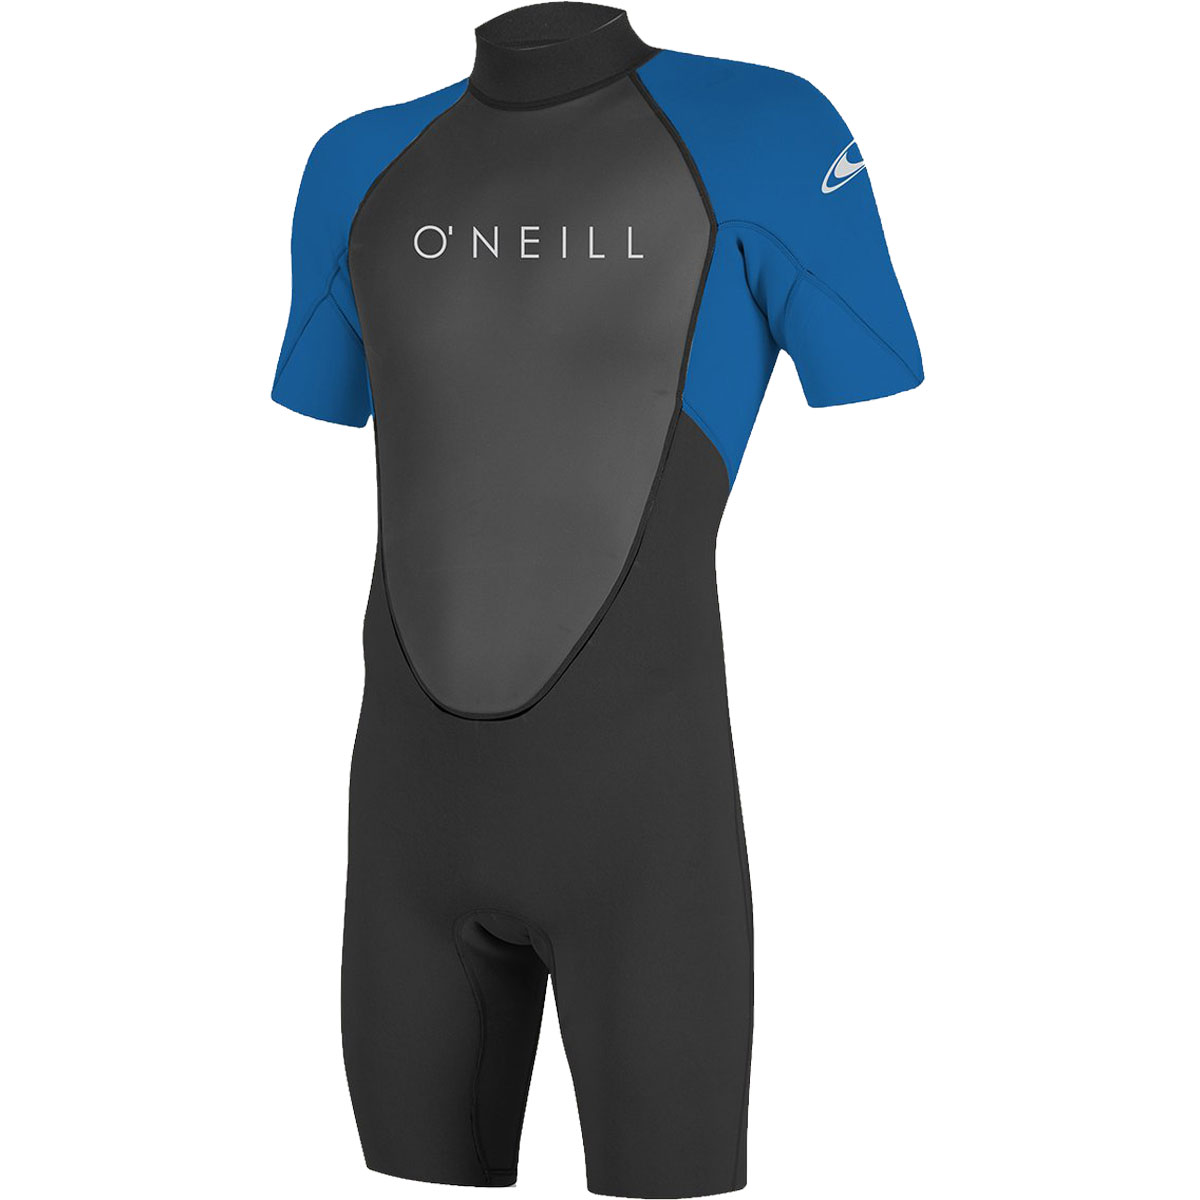 ONeill Reactor 2 2MM Shorty Wetsuit 2018 Ocean Oneill Surfing Wetsuits 